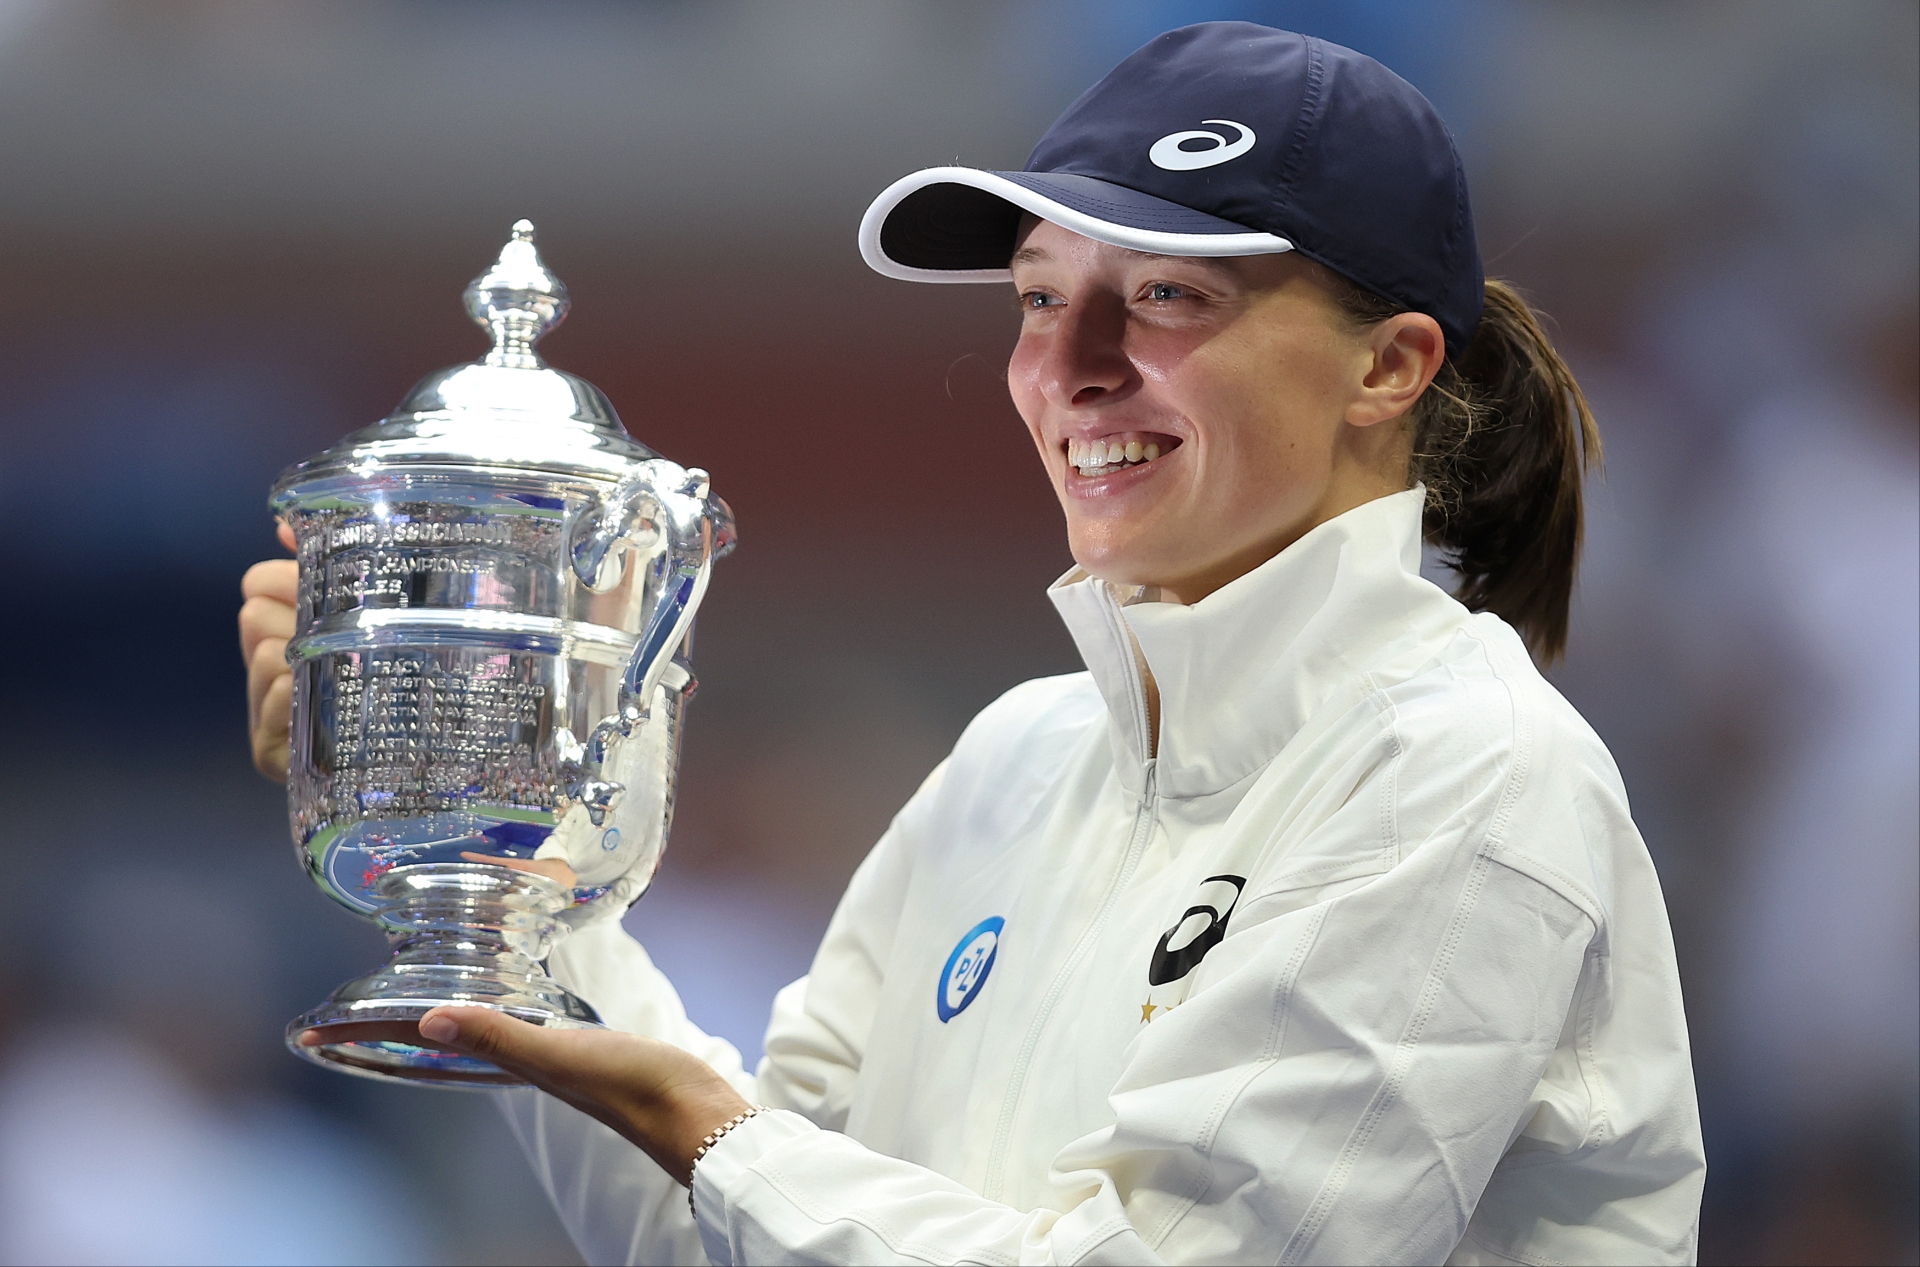 2023 Women's US Open Winner Odds Who will triumph at the 2023 Women's